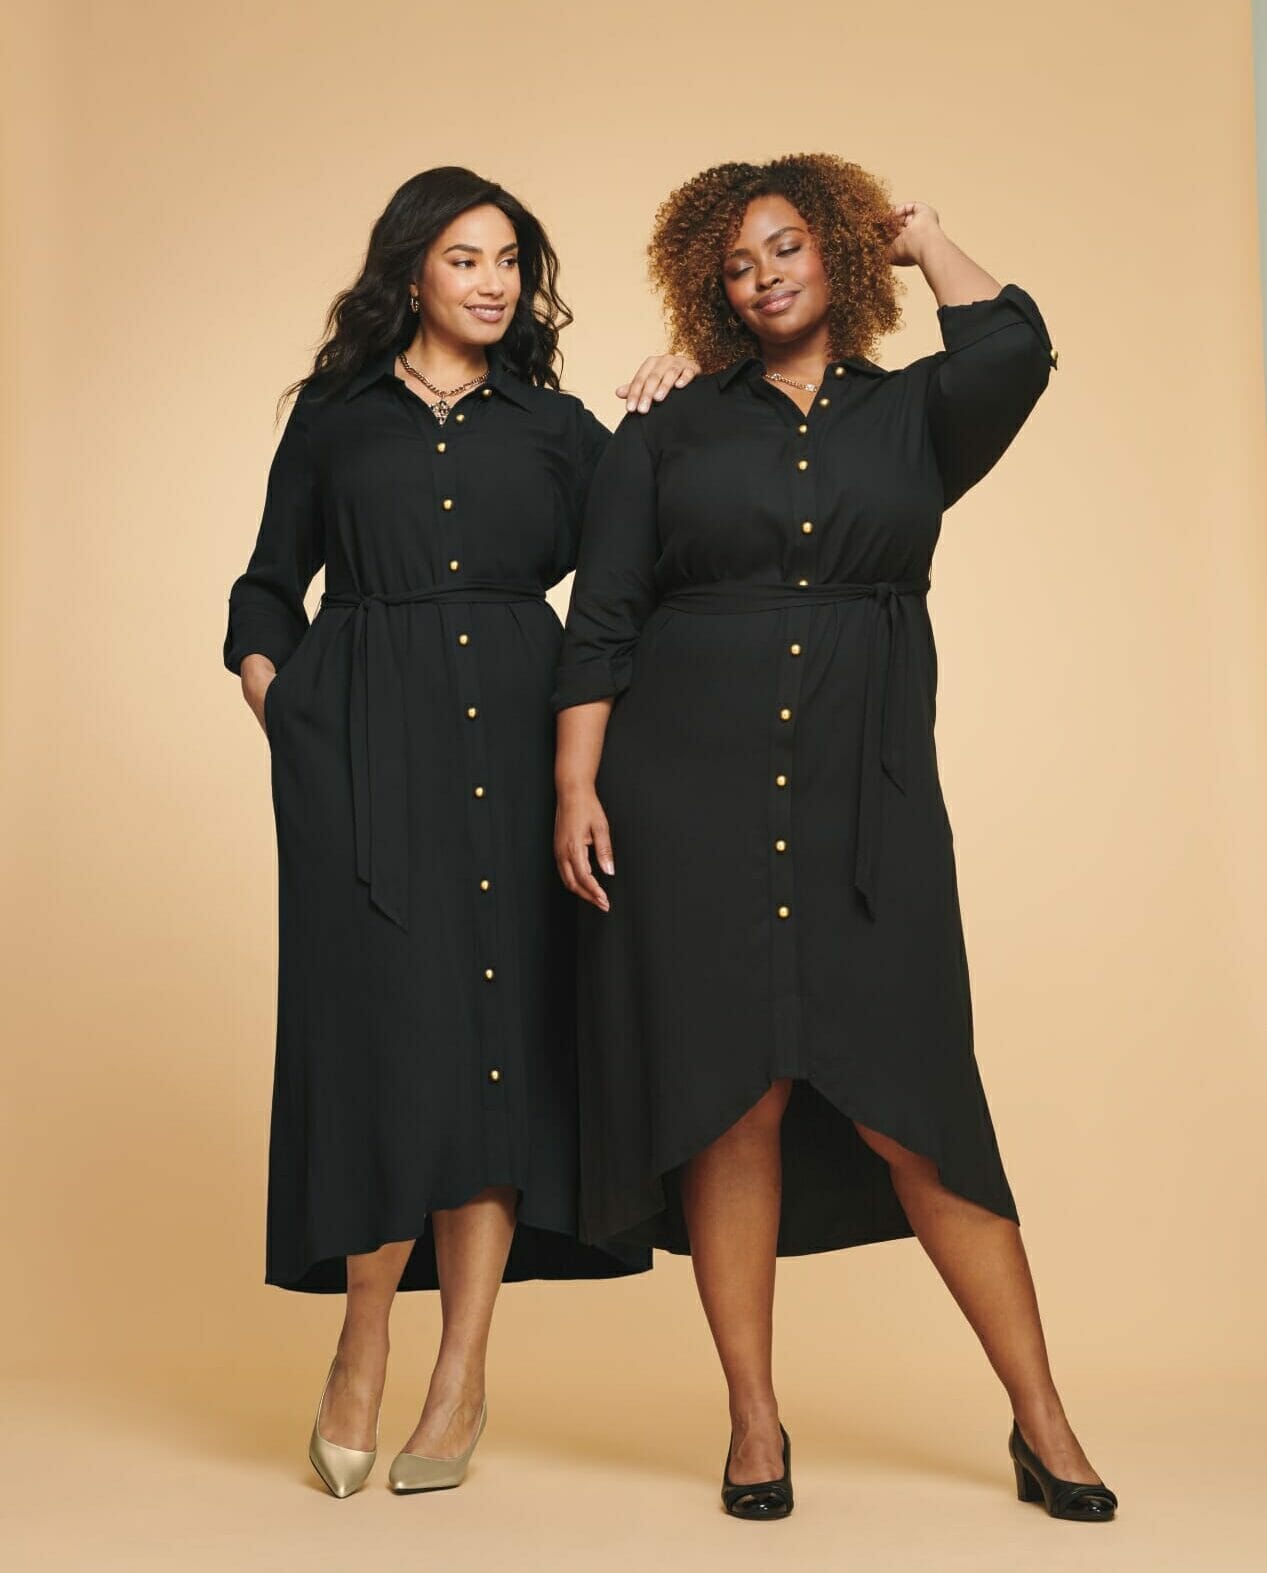 two plus-sized models wearing long sleeve black dresses.